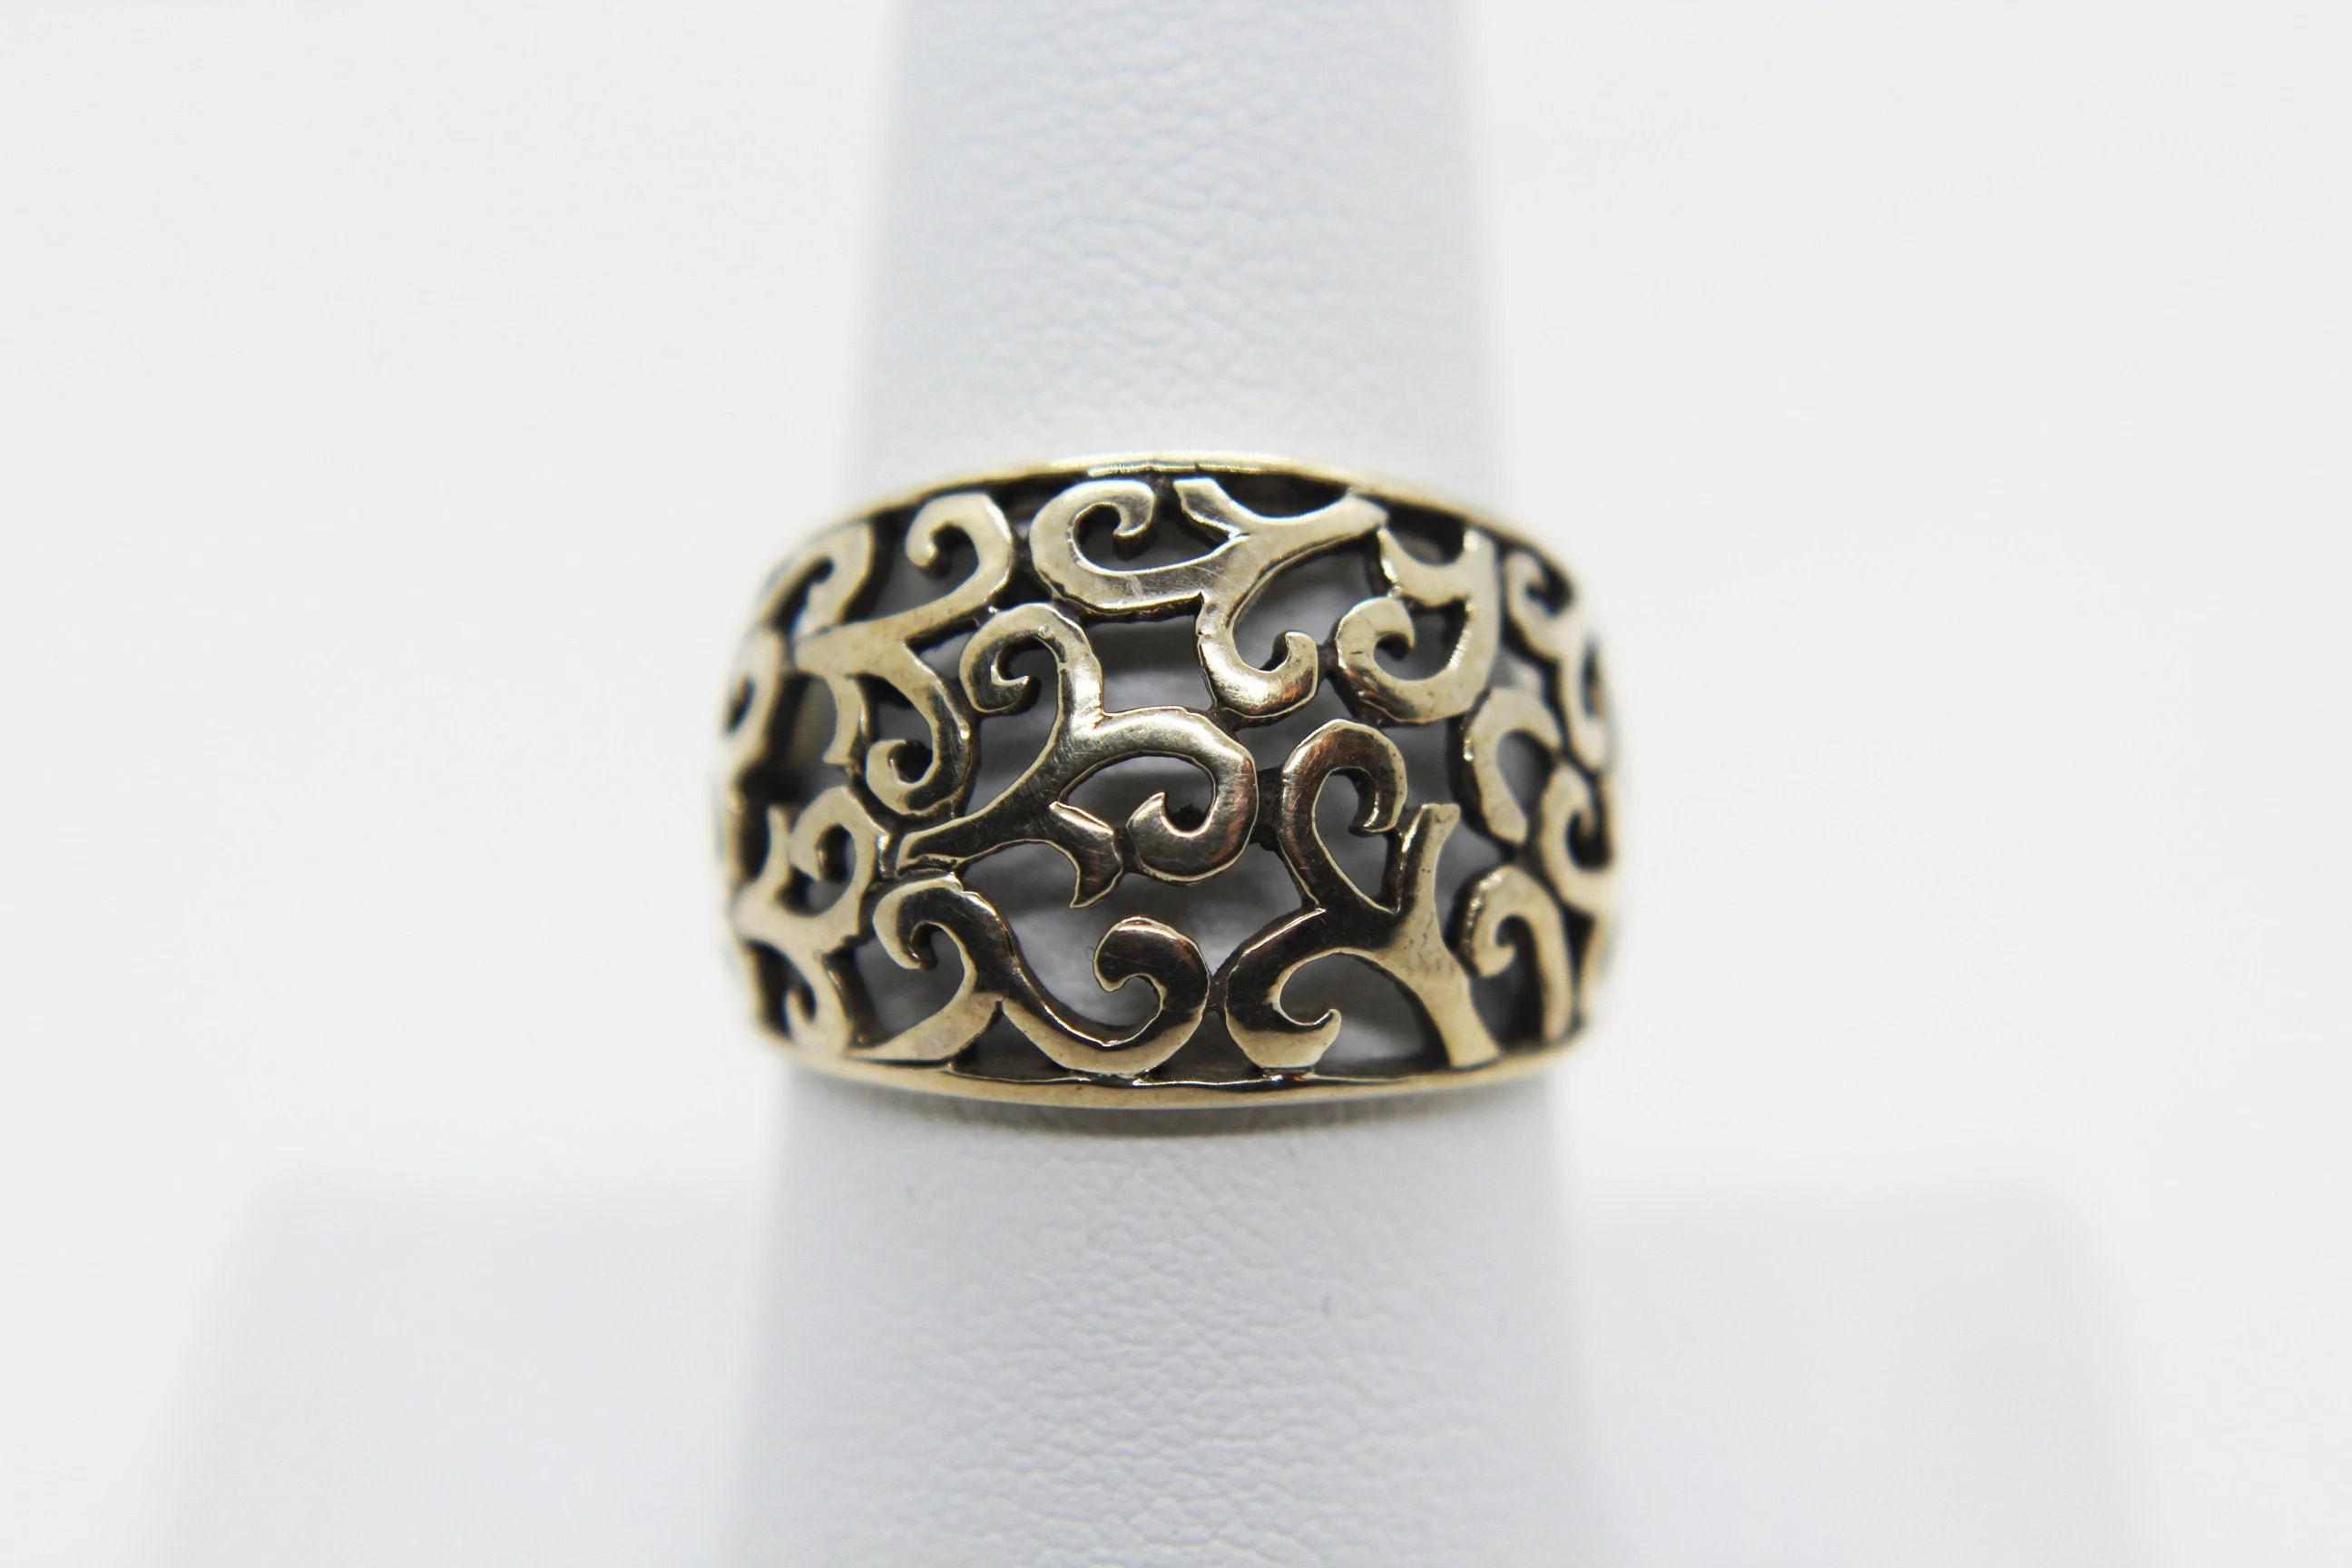 Vintage Silver Swirl Ring - Size 8.5 - Unique Boho Retro MCM Jewelry at Whispering City RVA